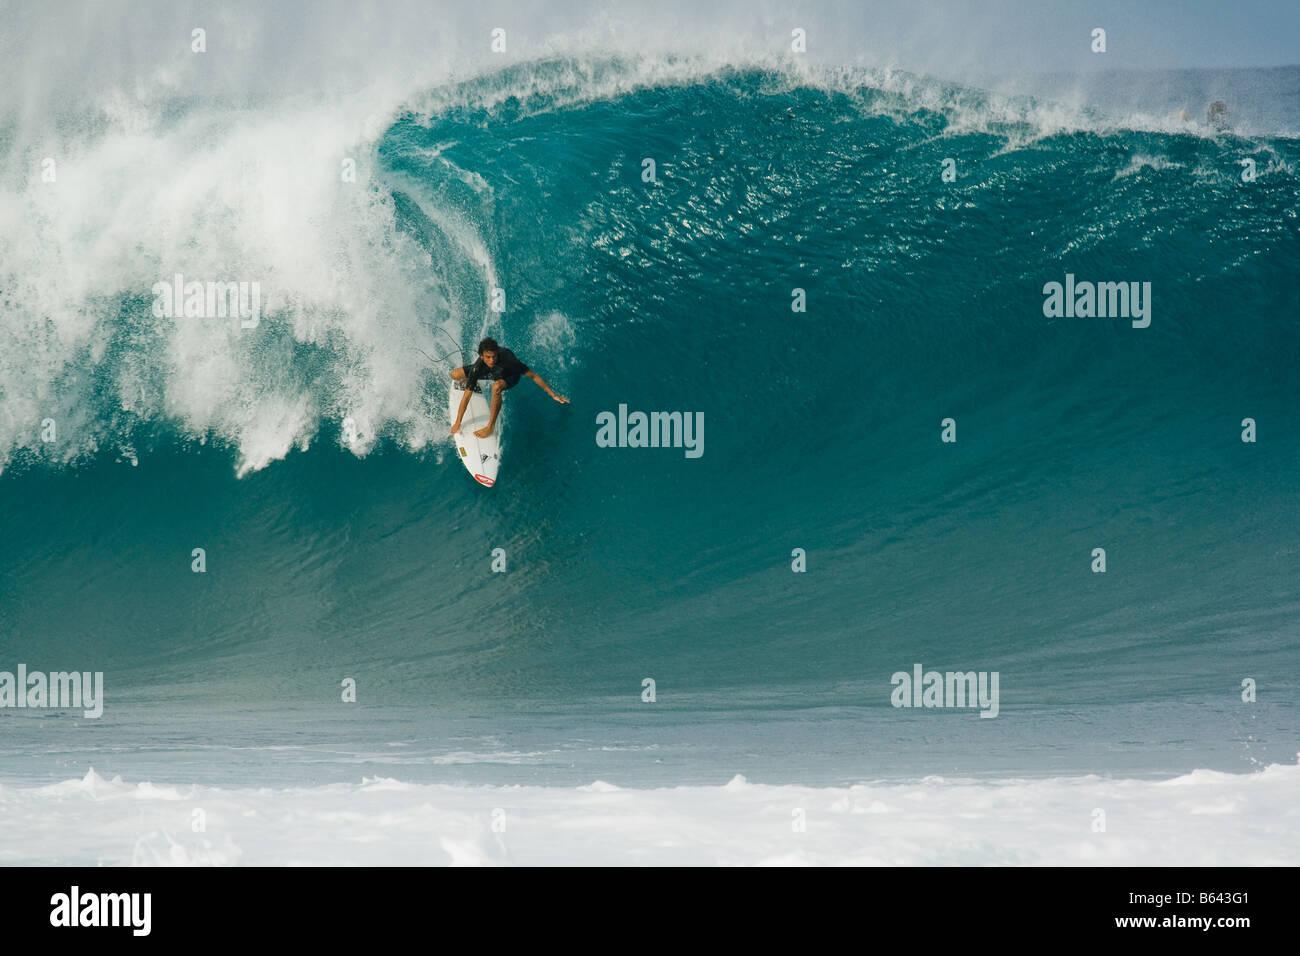 Surfer riding enorme ondata, Pipeline, North Shore Oahu, Hawaii Foto Stock